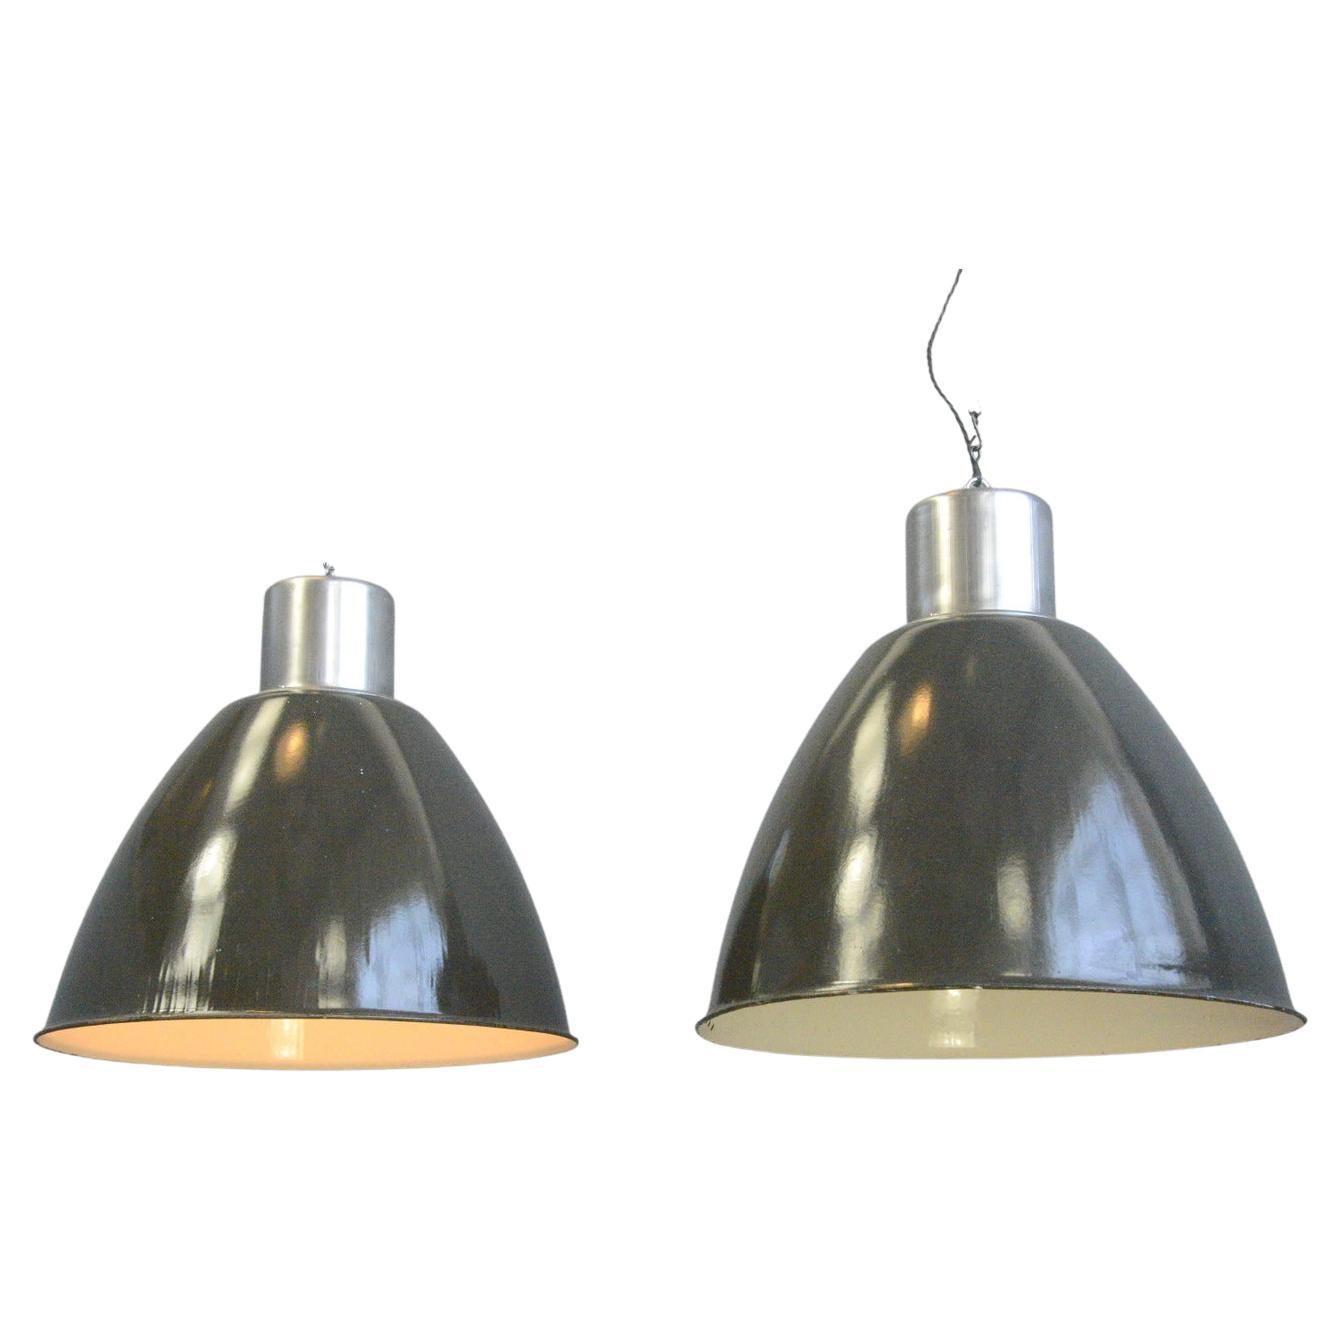 Czech XL Industrial Pendant Lights, Circa 1950s For Sale